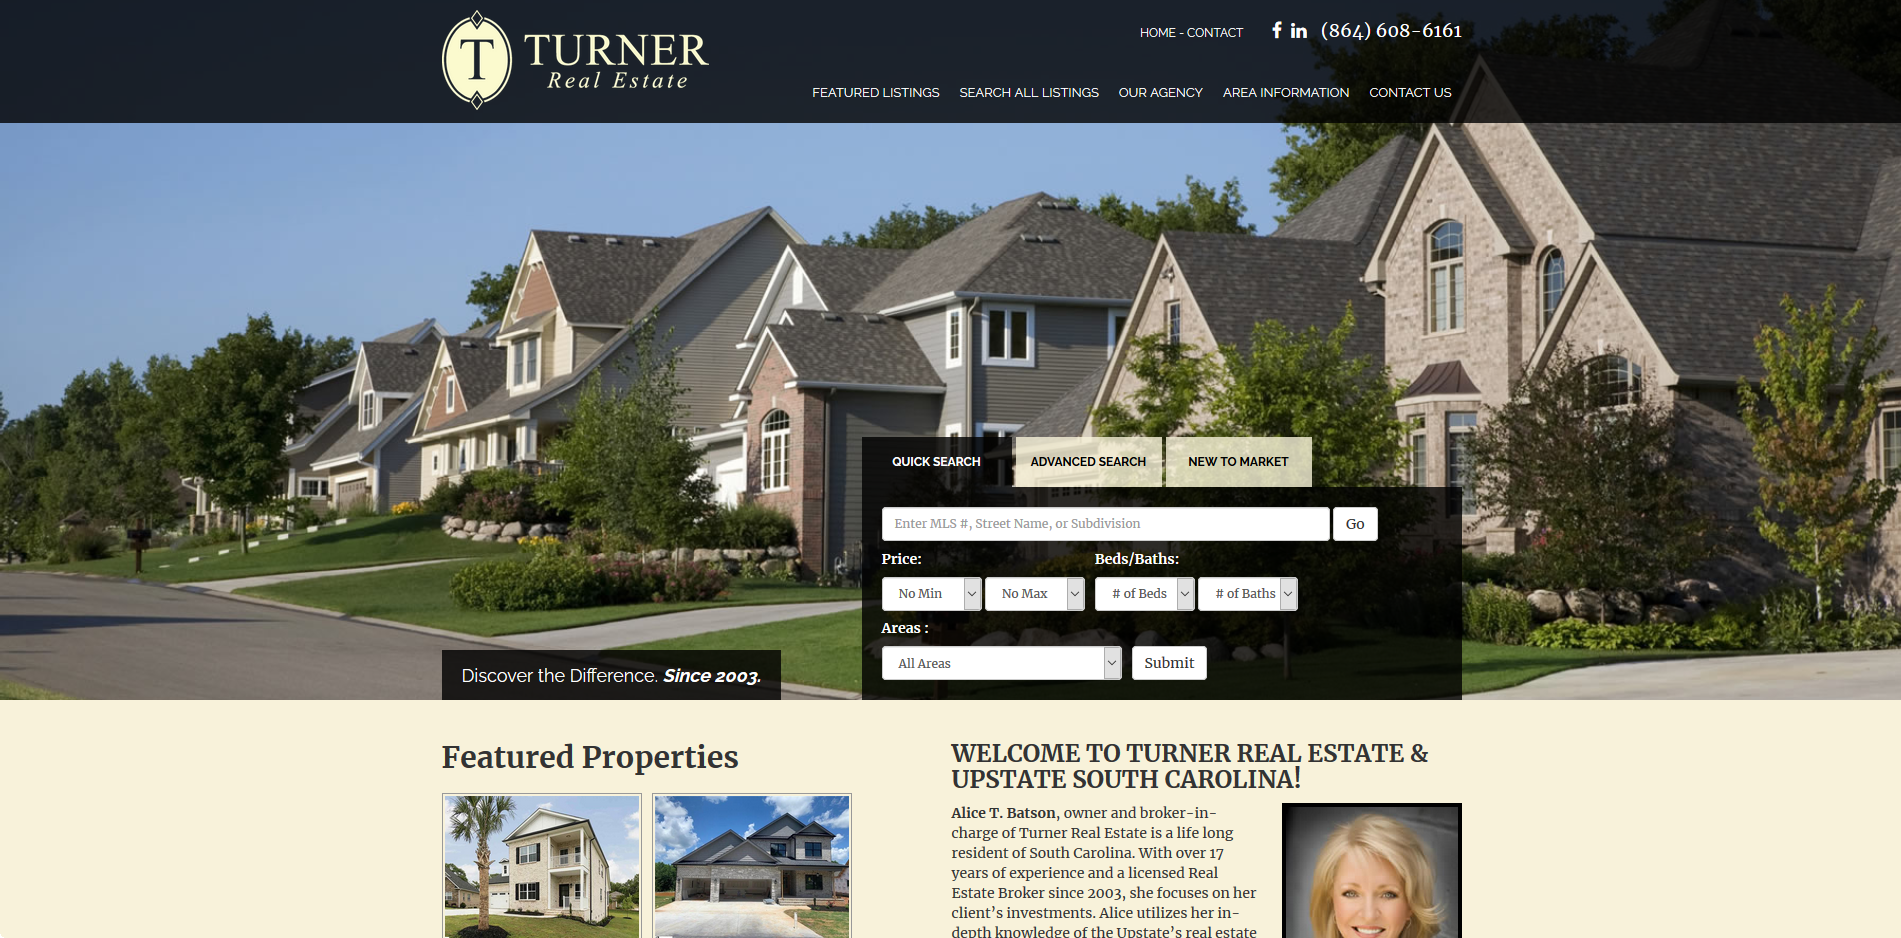 Turner Real Estate Company